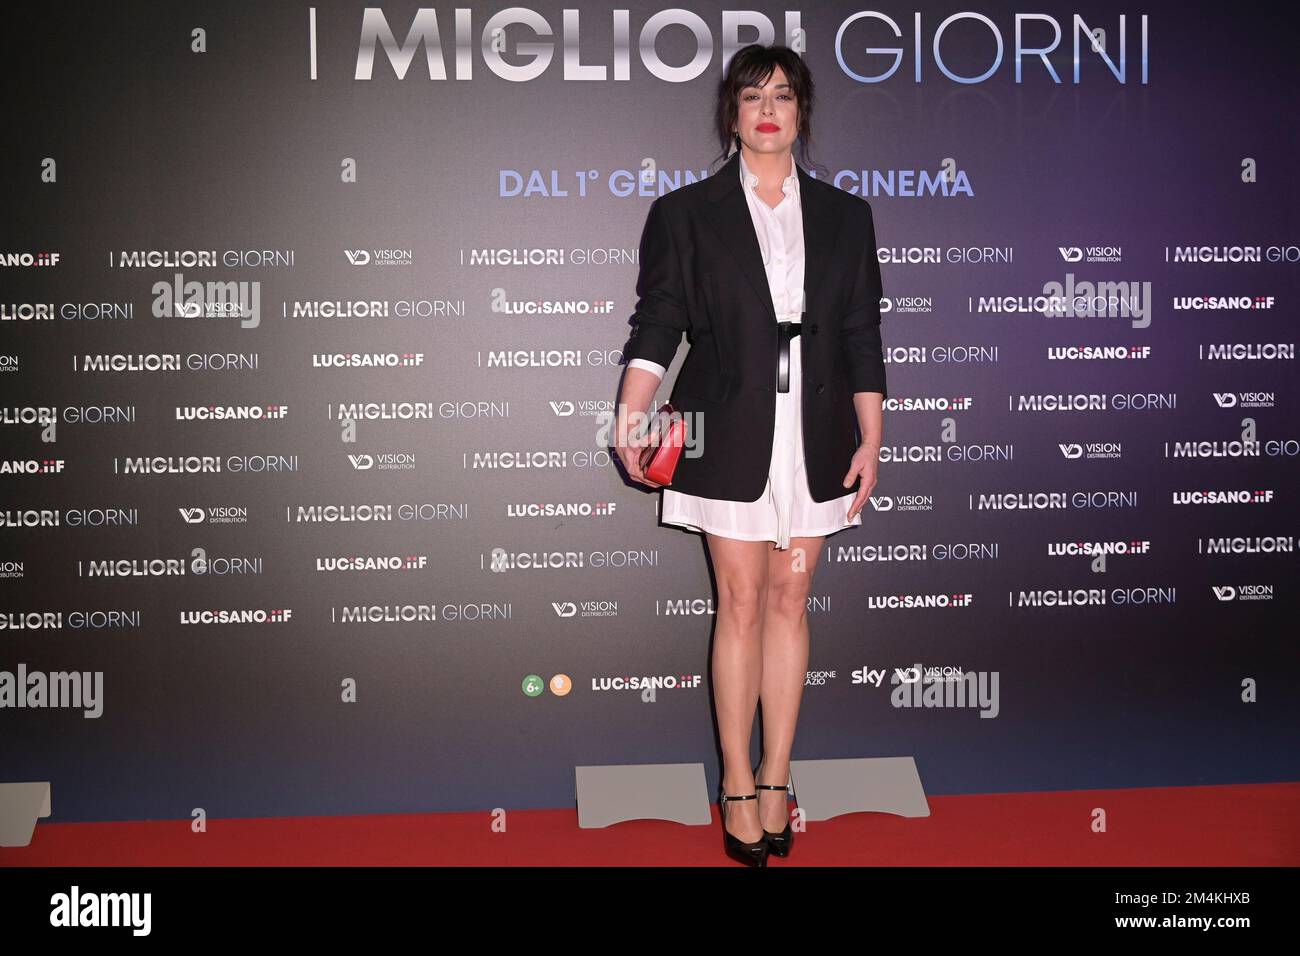 Rome, Italy. 21st Dec, 2022. Valentina Lodovini attends the red carpet of the movie 'I migliori giorni' at Cinema Adriano. (Photo by Mario Cartelli/SOPA Images/Sipa USA) Credit: Sipa USA/Alamy Live News Stock Photo